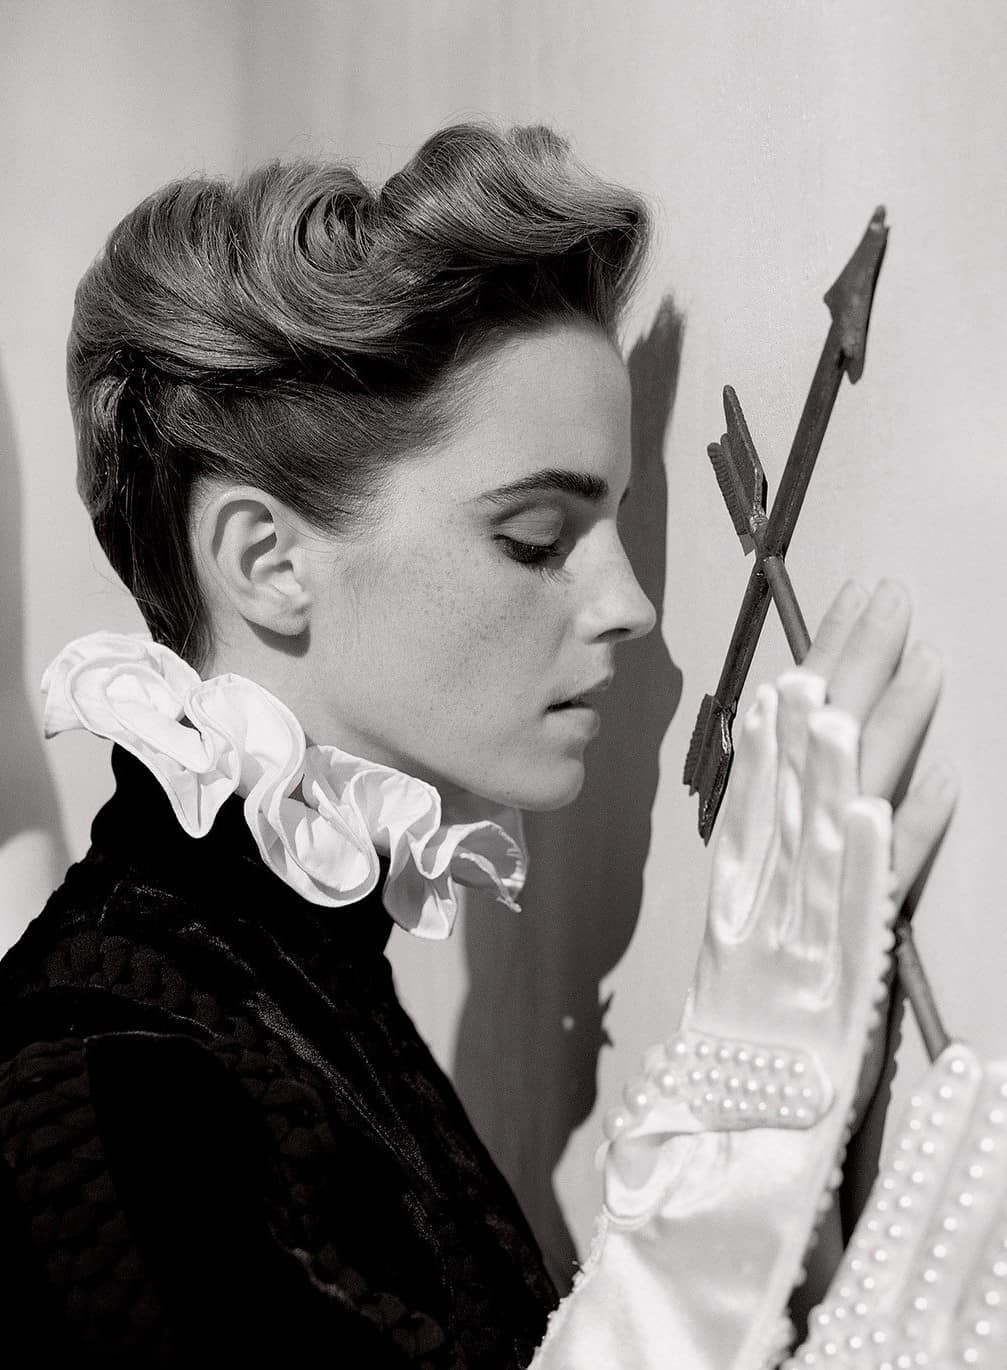 Emma Watson Looks Absolutely Stunning on the Cover of Vanity Fair Magazine